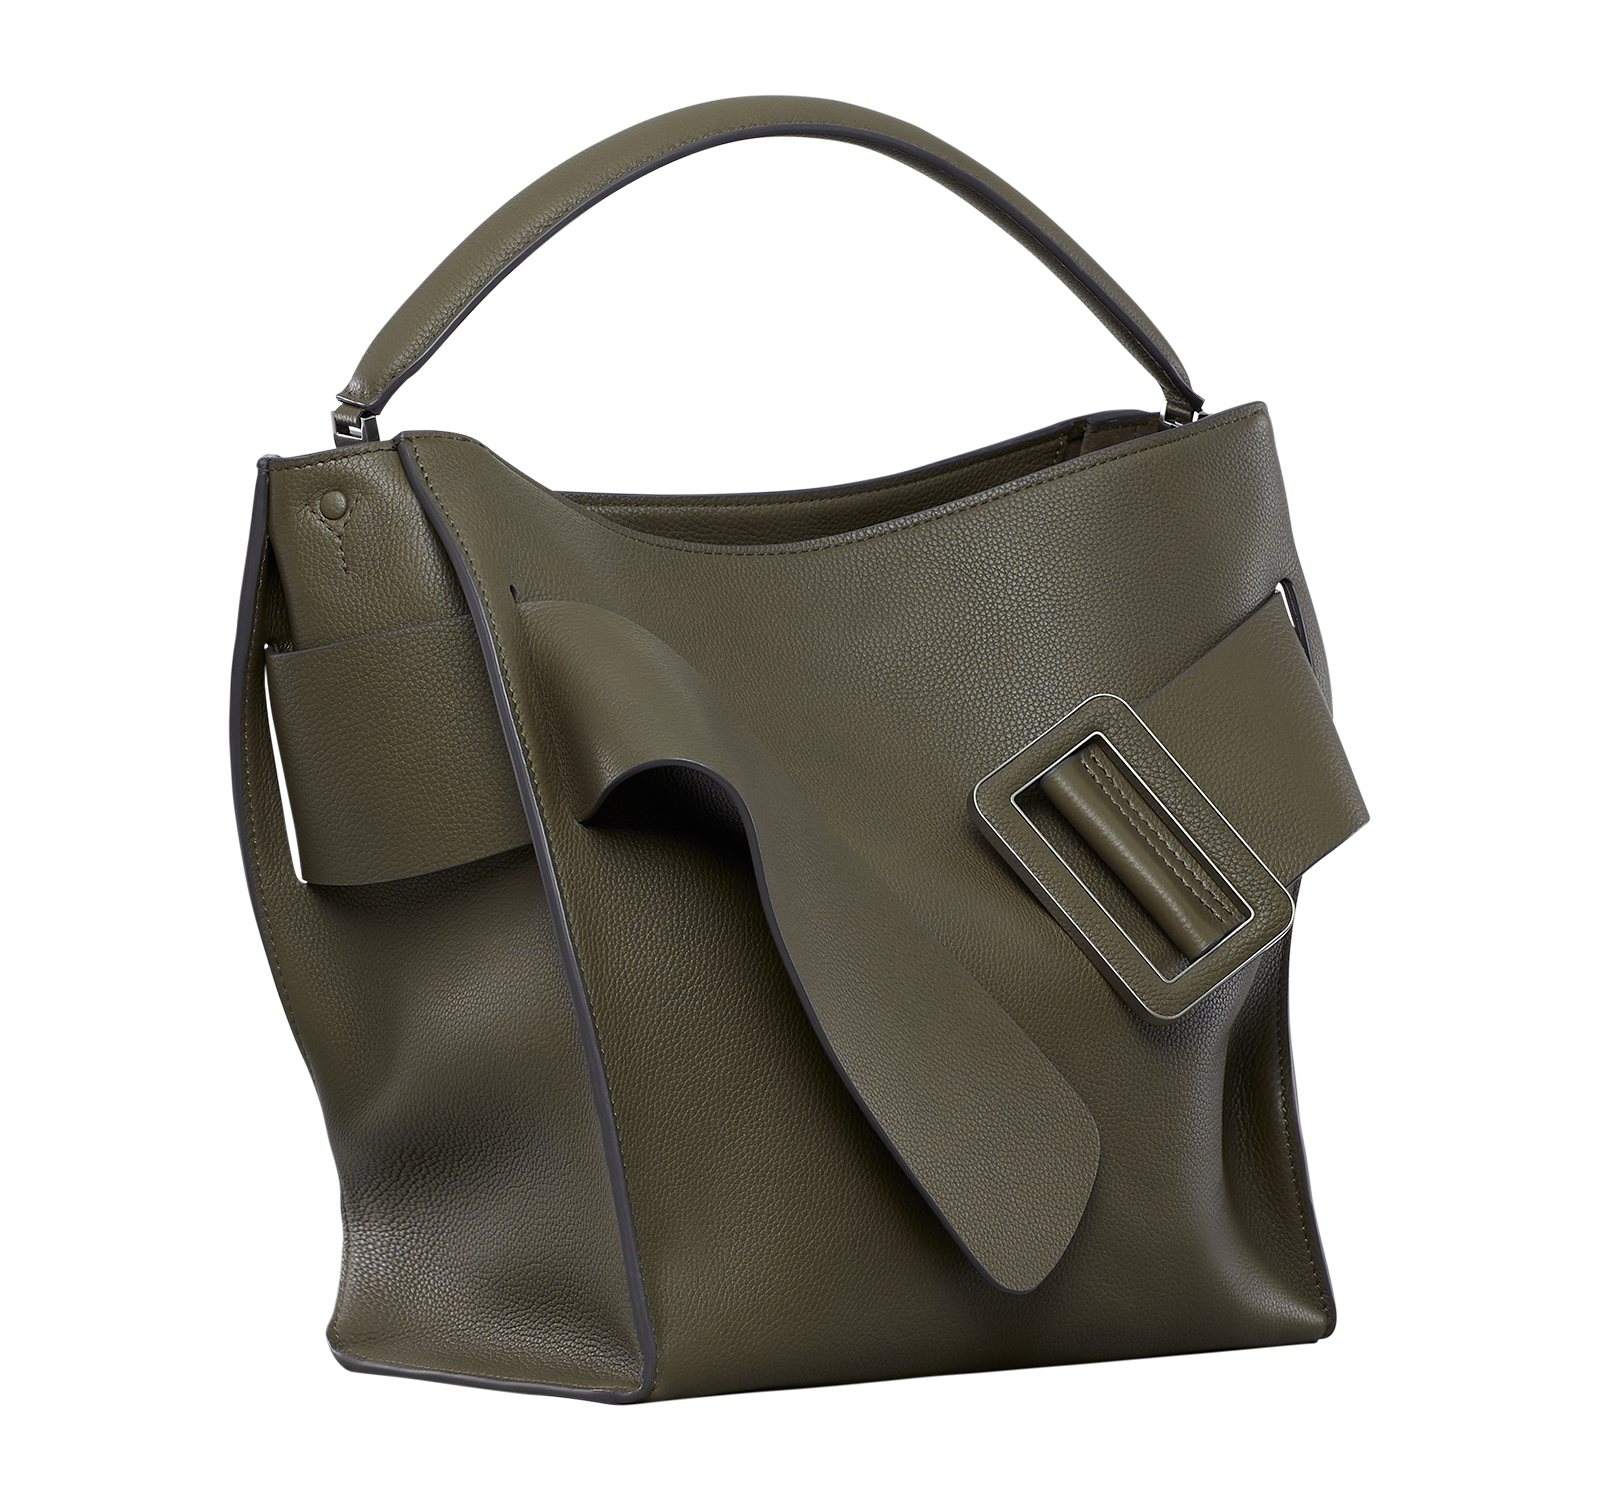 The Devon Leather Messenger Bag | Leather Bags for Men - Tanner Bates